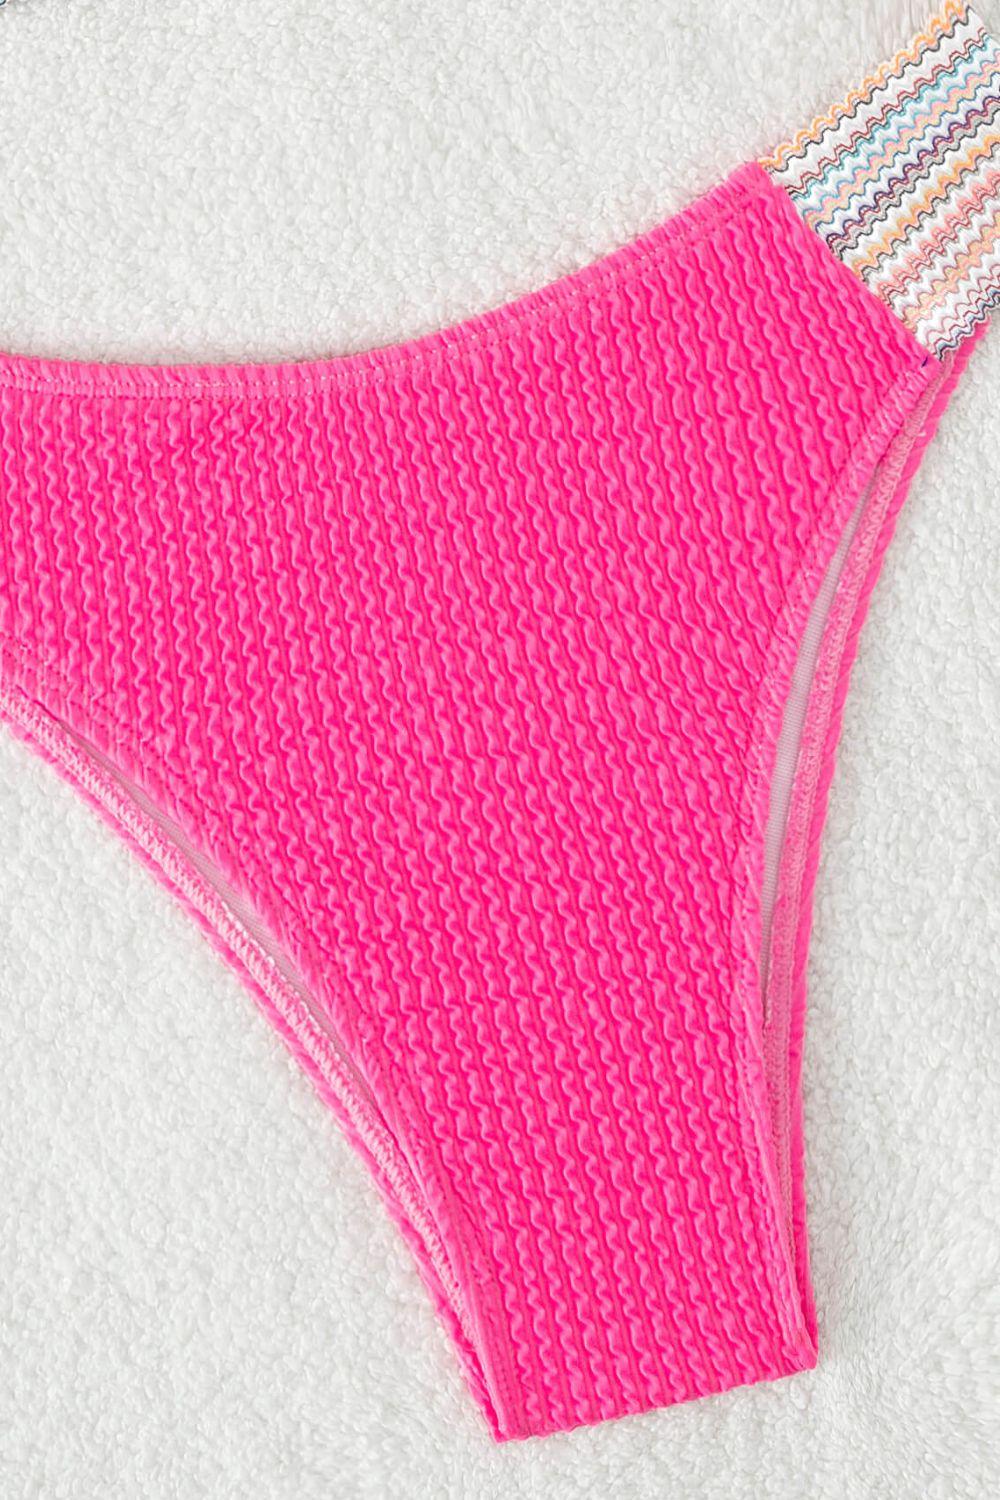 Women's Swimwear - 2PC Contrast Textured High Cut Swim Set